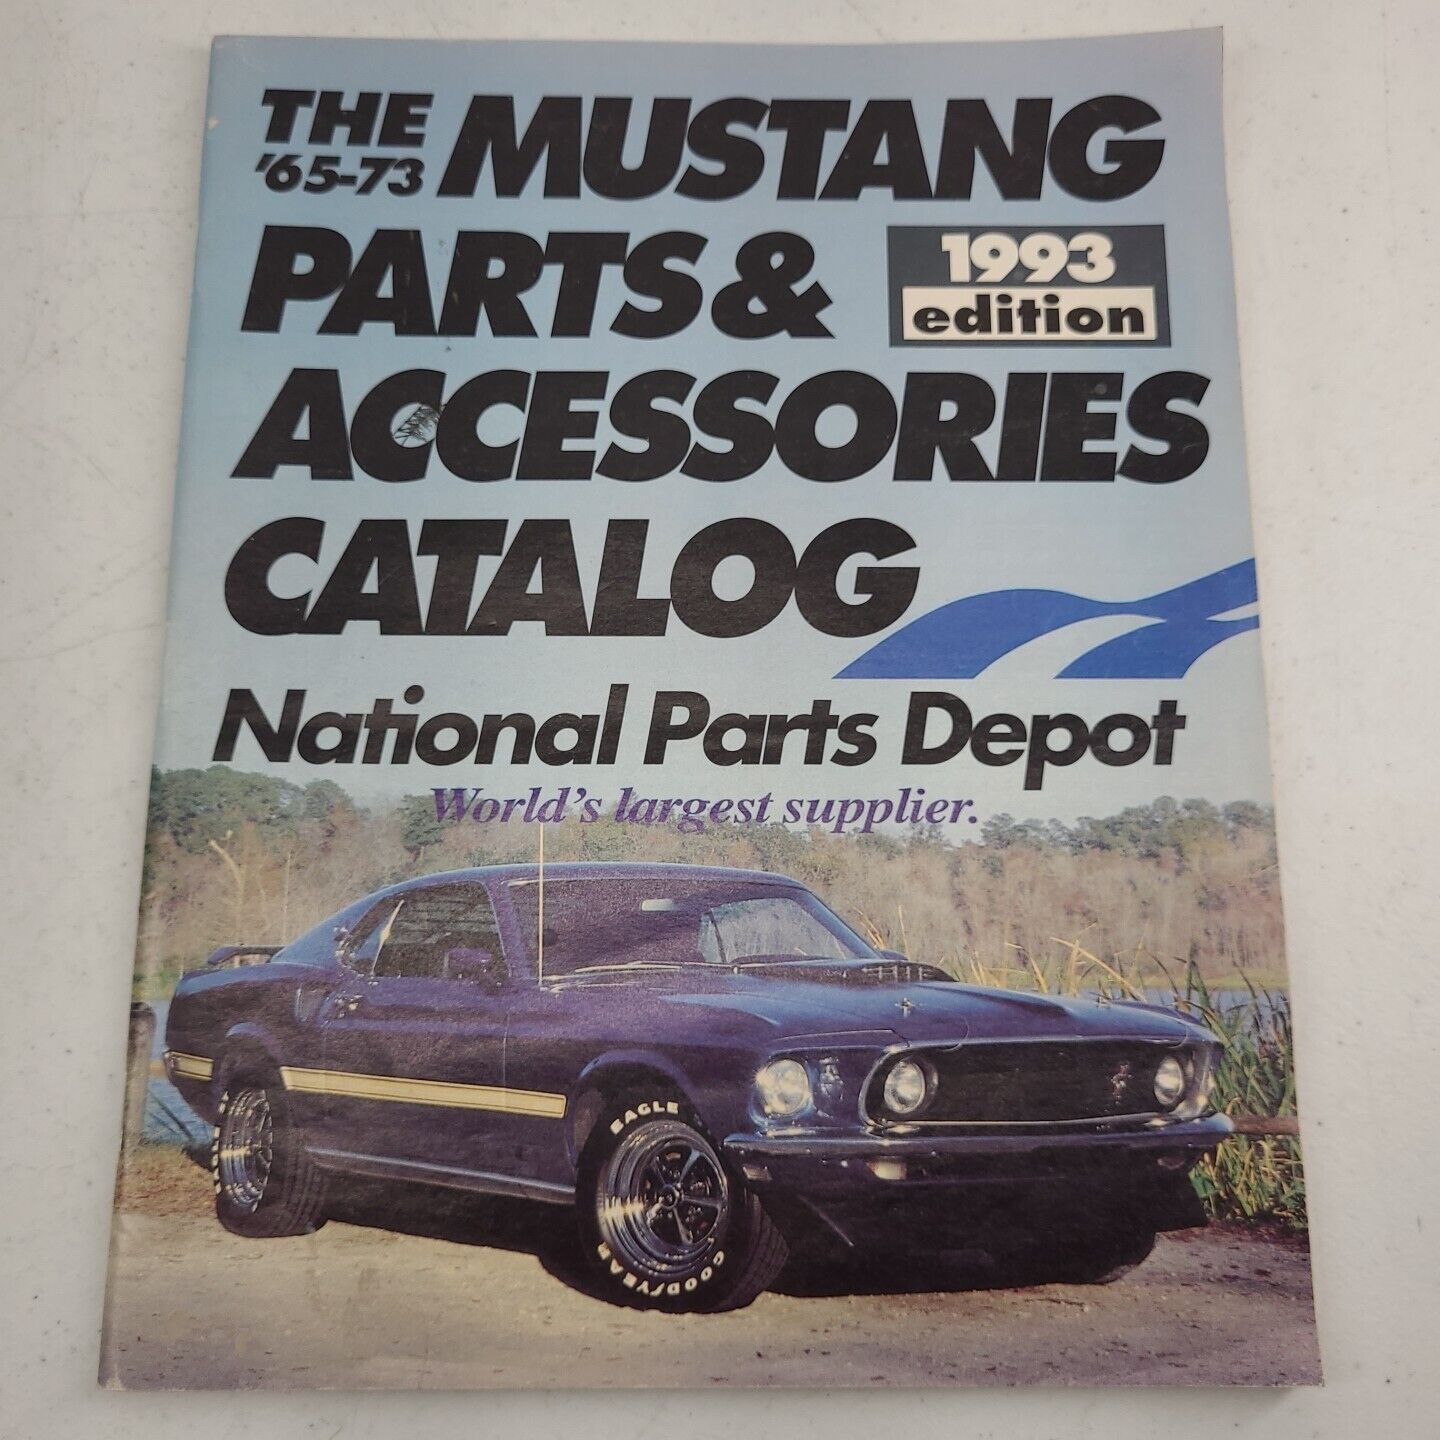 Mustang Parts & Accessories Catalog 1965-73 1993 Edition National Parts Depot